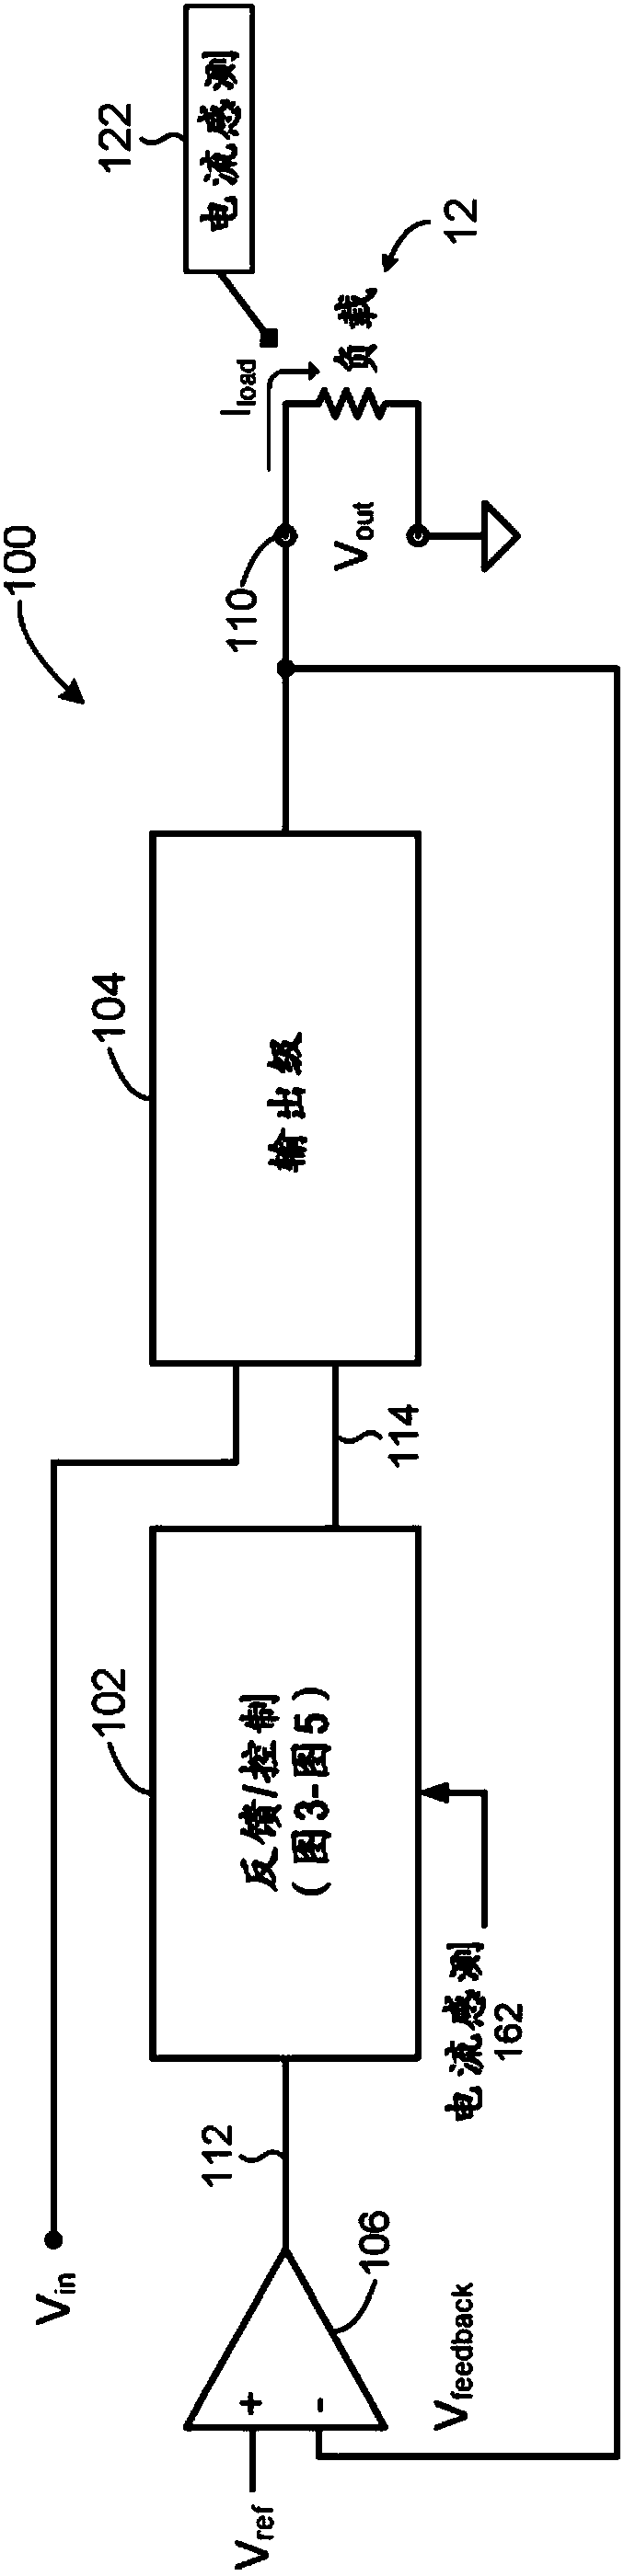 Voltage regulator having auto mode optimization for load profiles